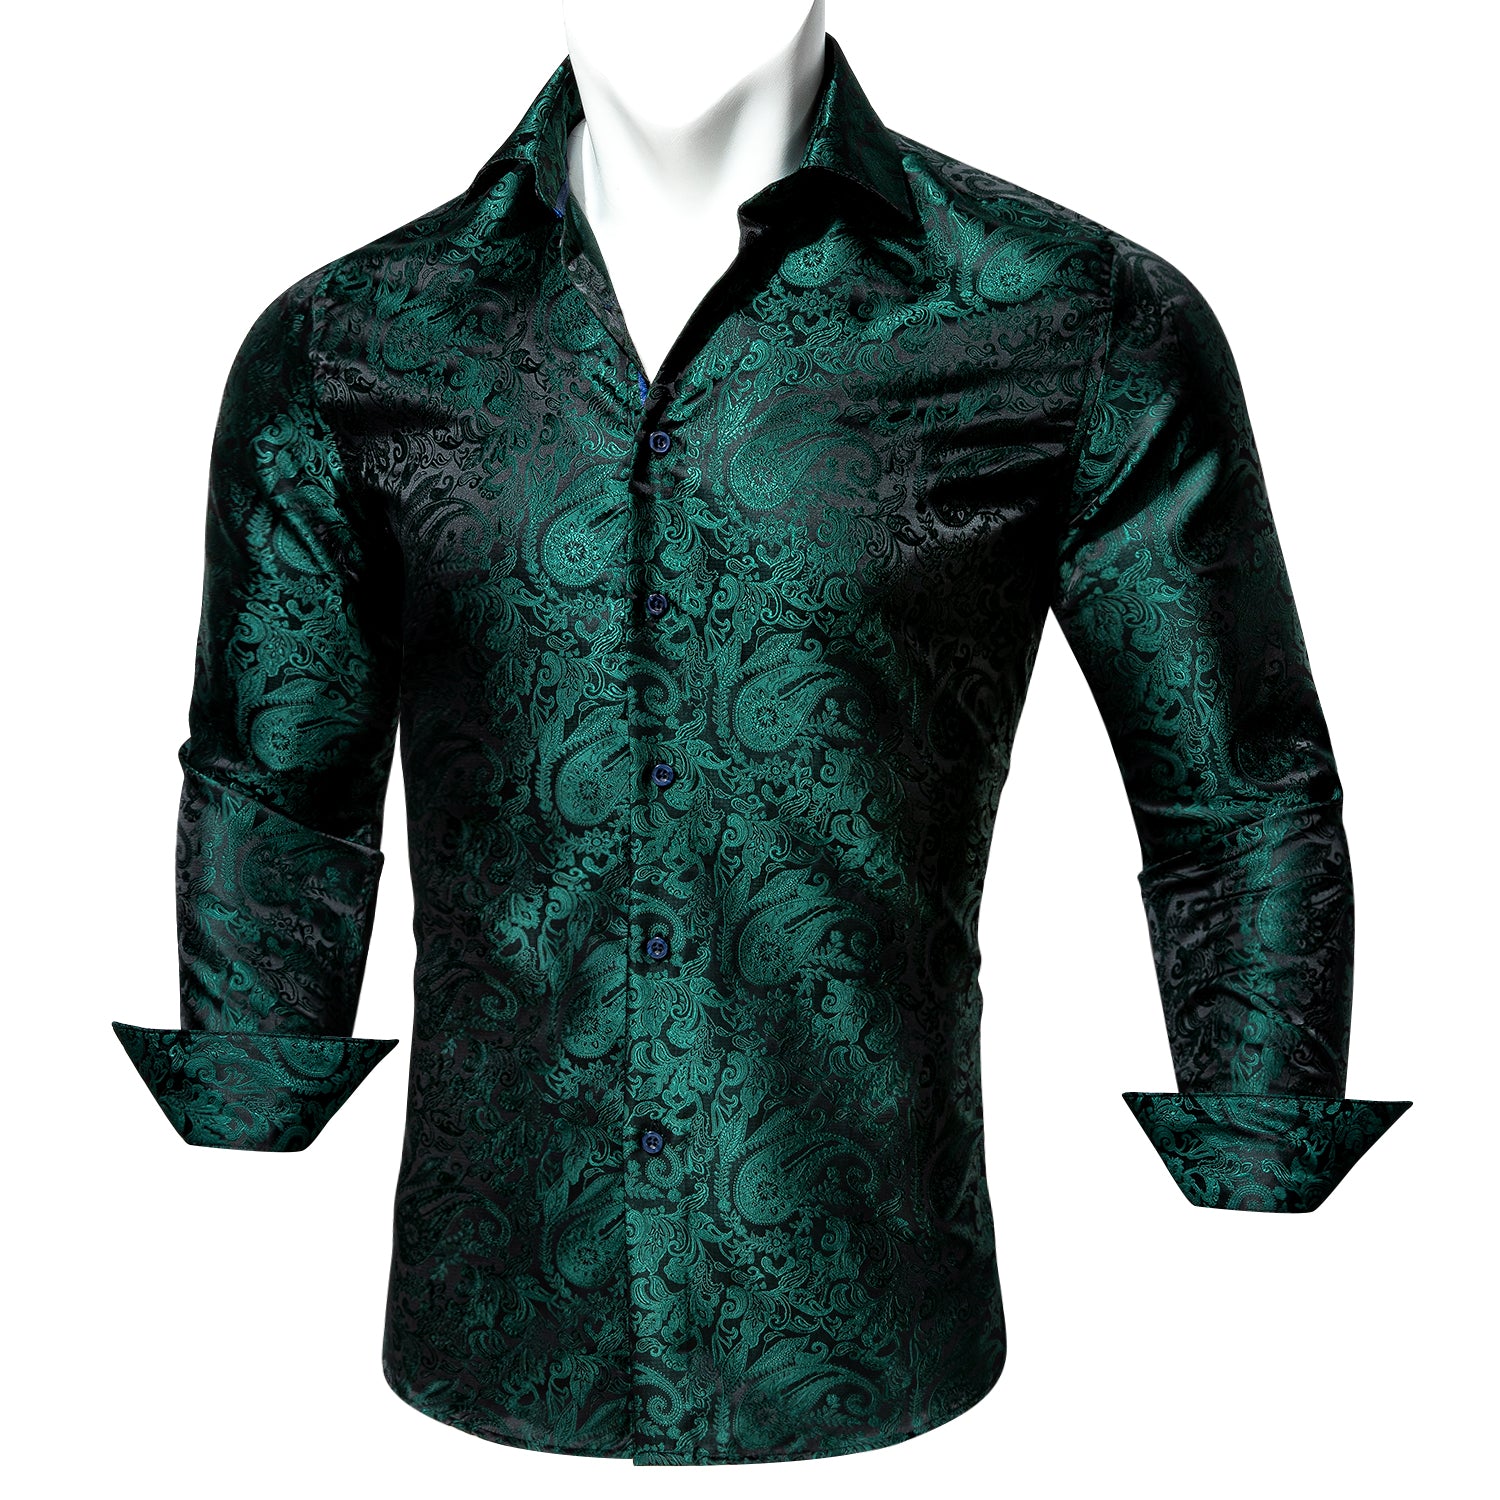 Barry.wang Button Down Shirt Green Paisley Silk Long Sleeve Shirt for Men